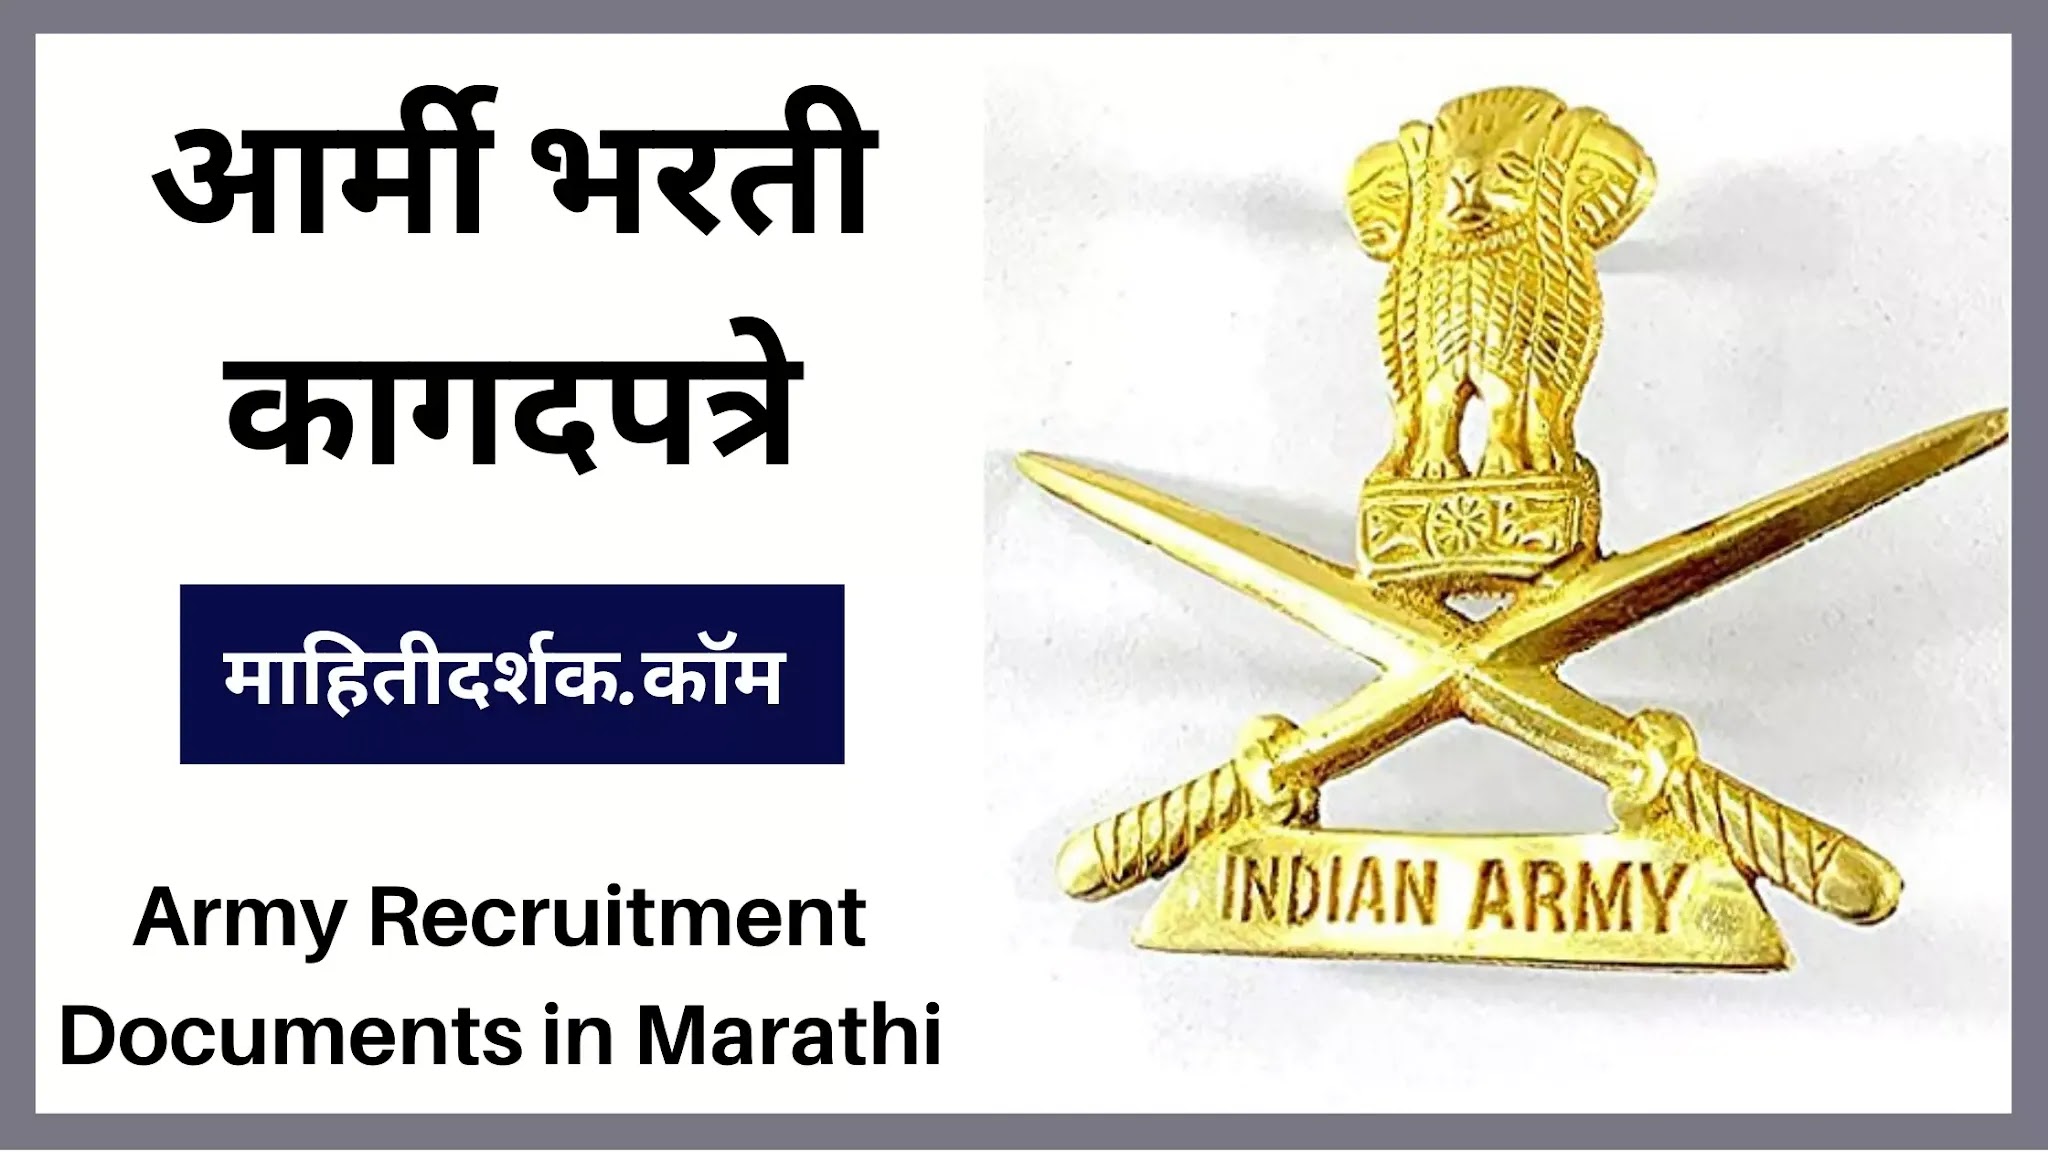 Army Recruitment Documents in Marathi